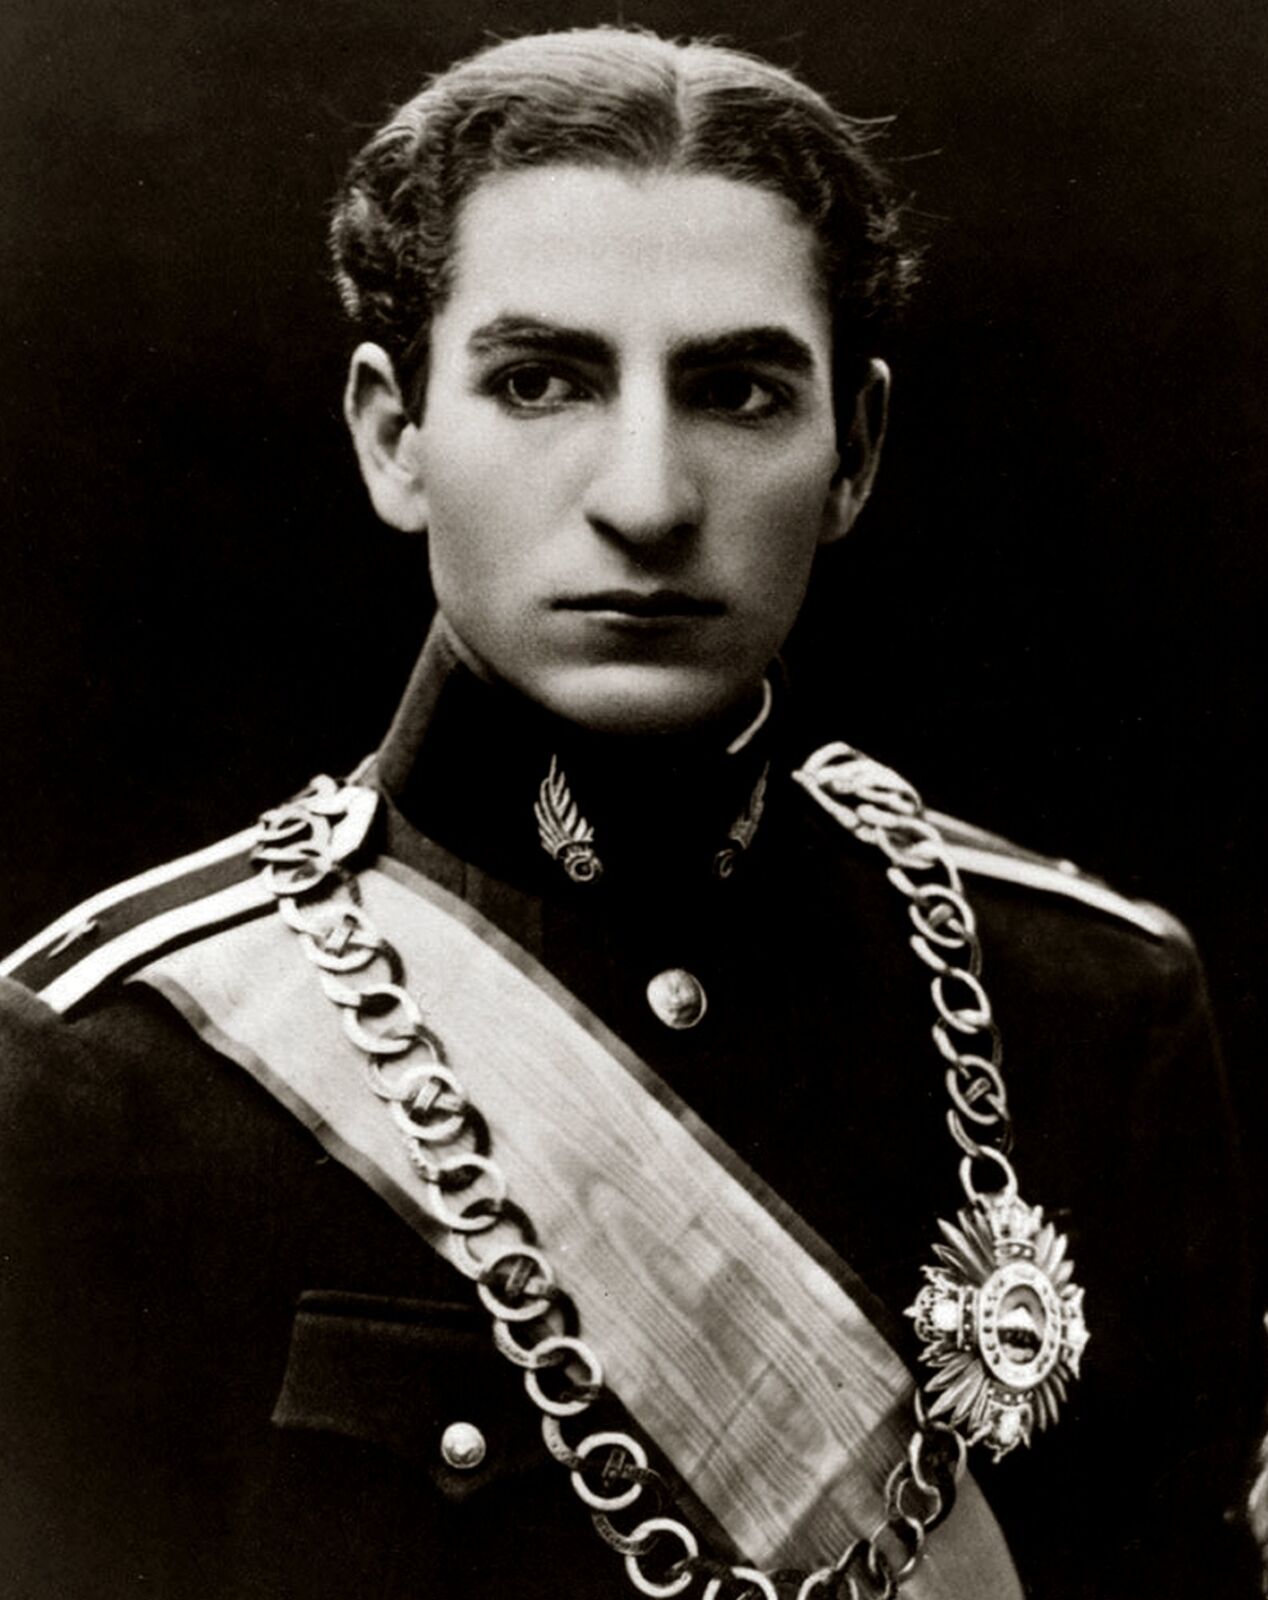 1939 IRANIAN Crown Prince MOHAMMAD REZA Photo (189-n)